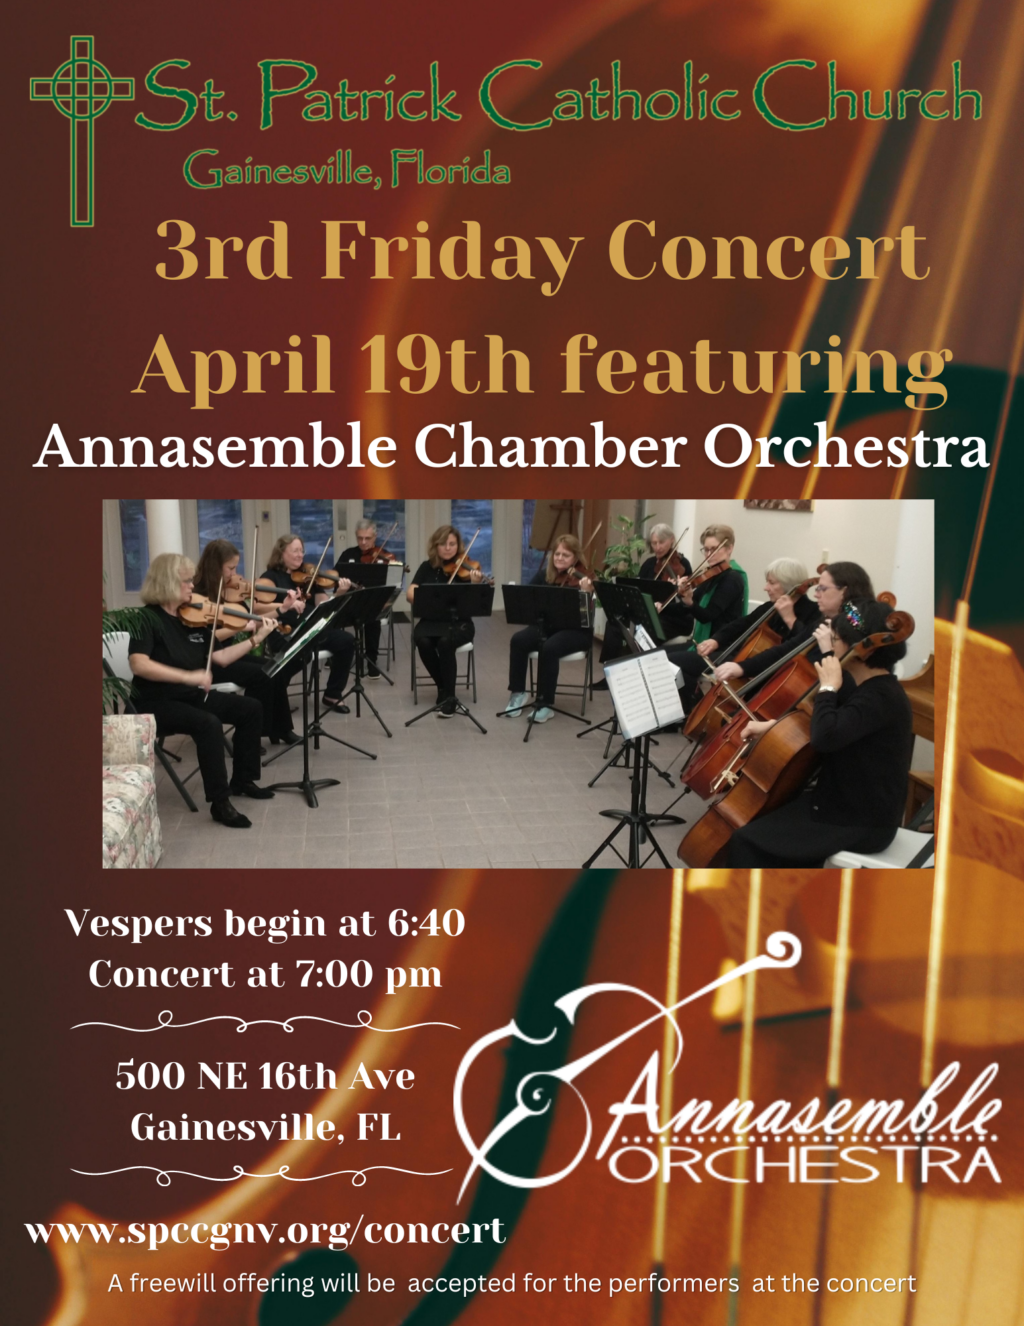 annasemble chamber orchestra concert